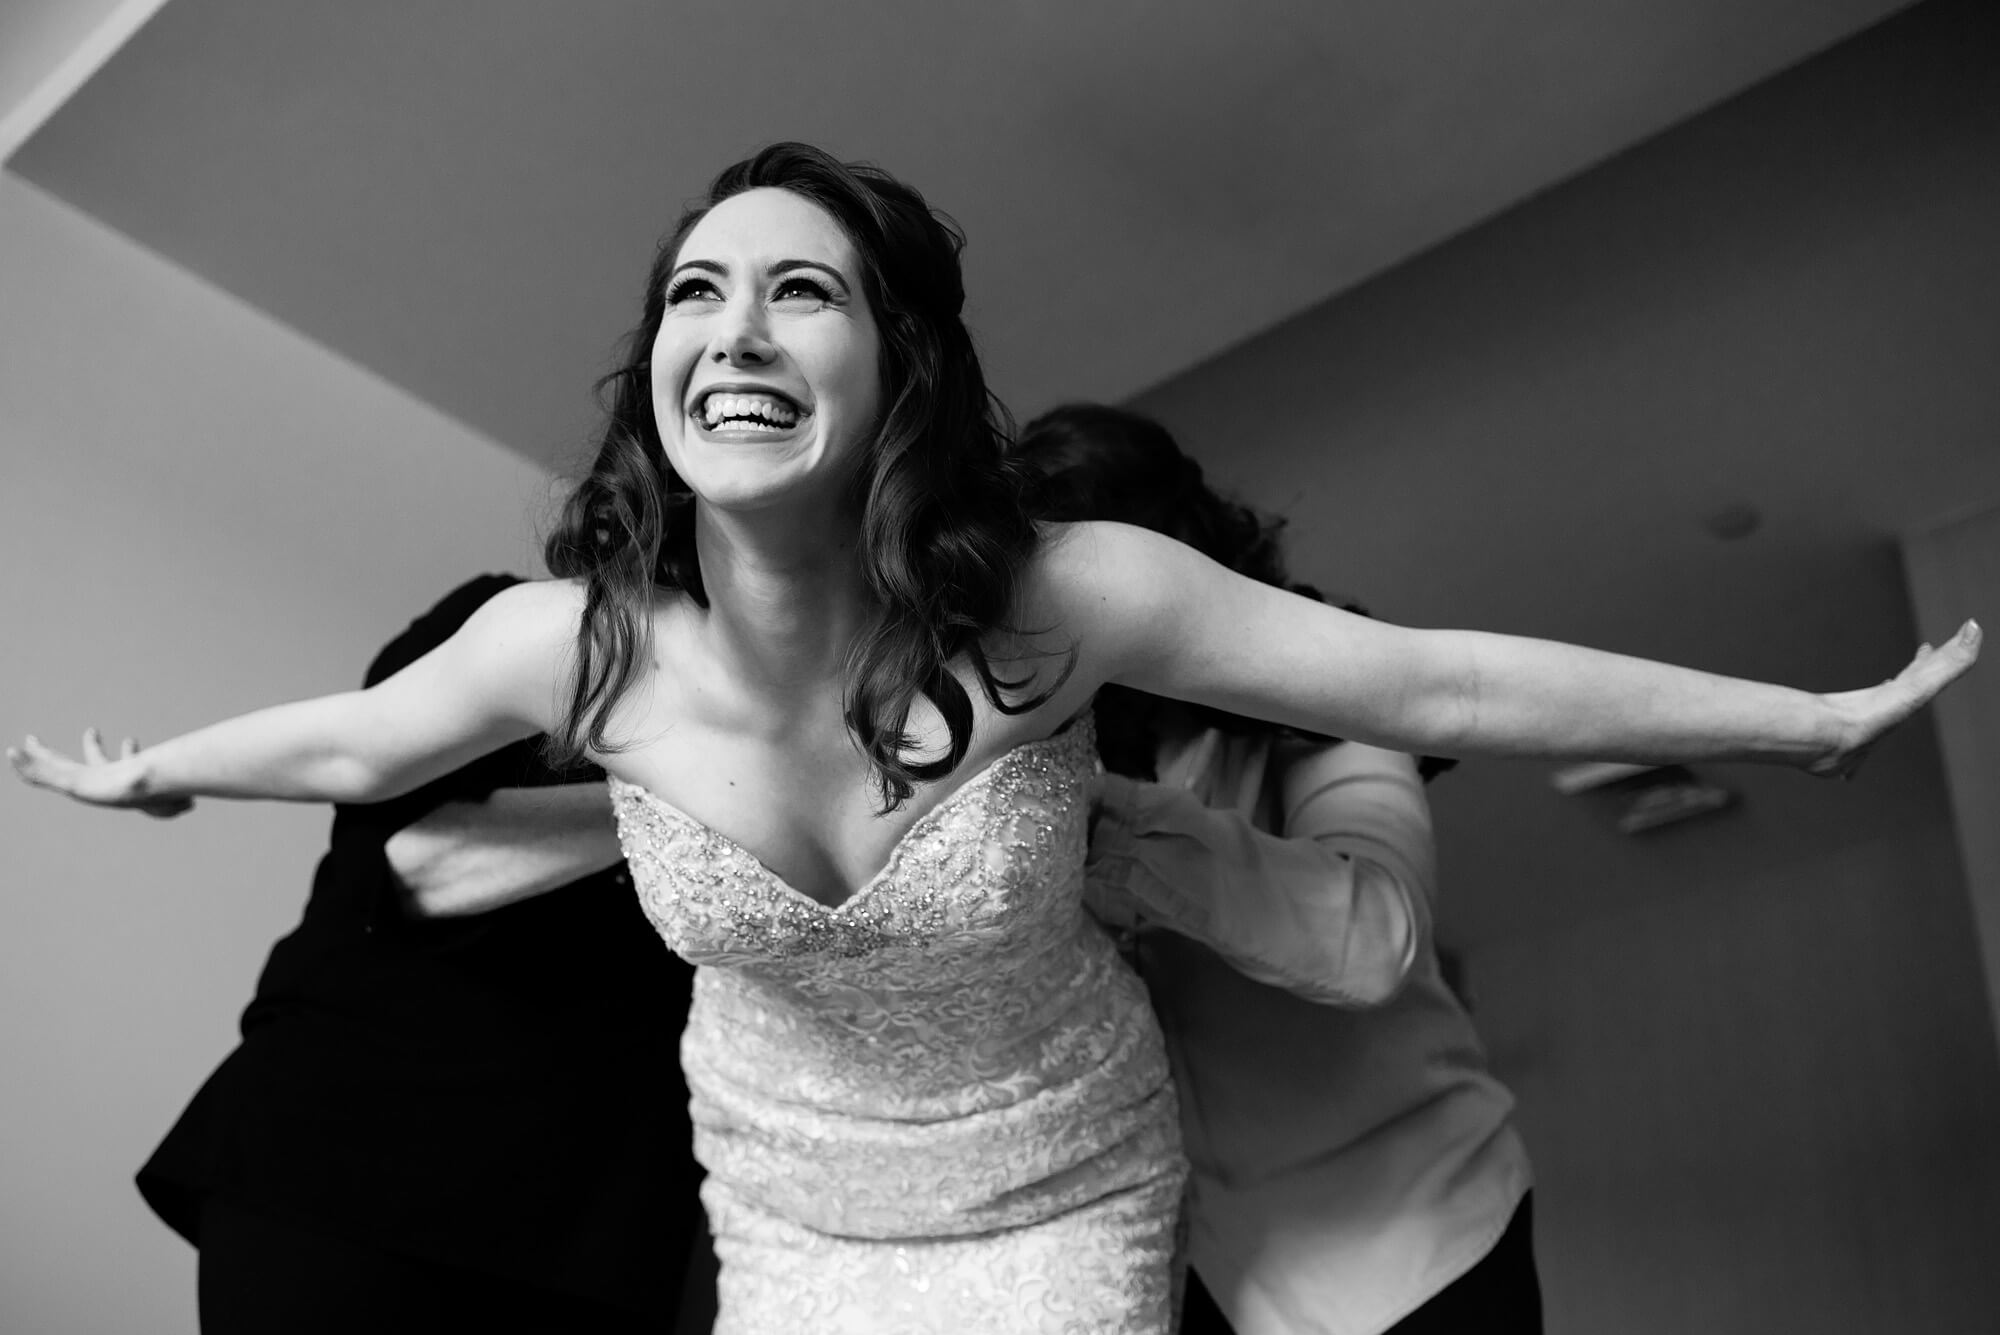 fun photo of happy bride getting into dress superman pose